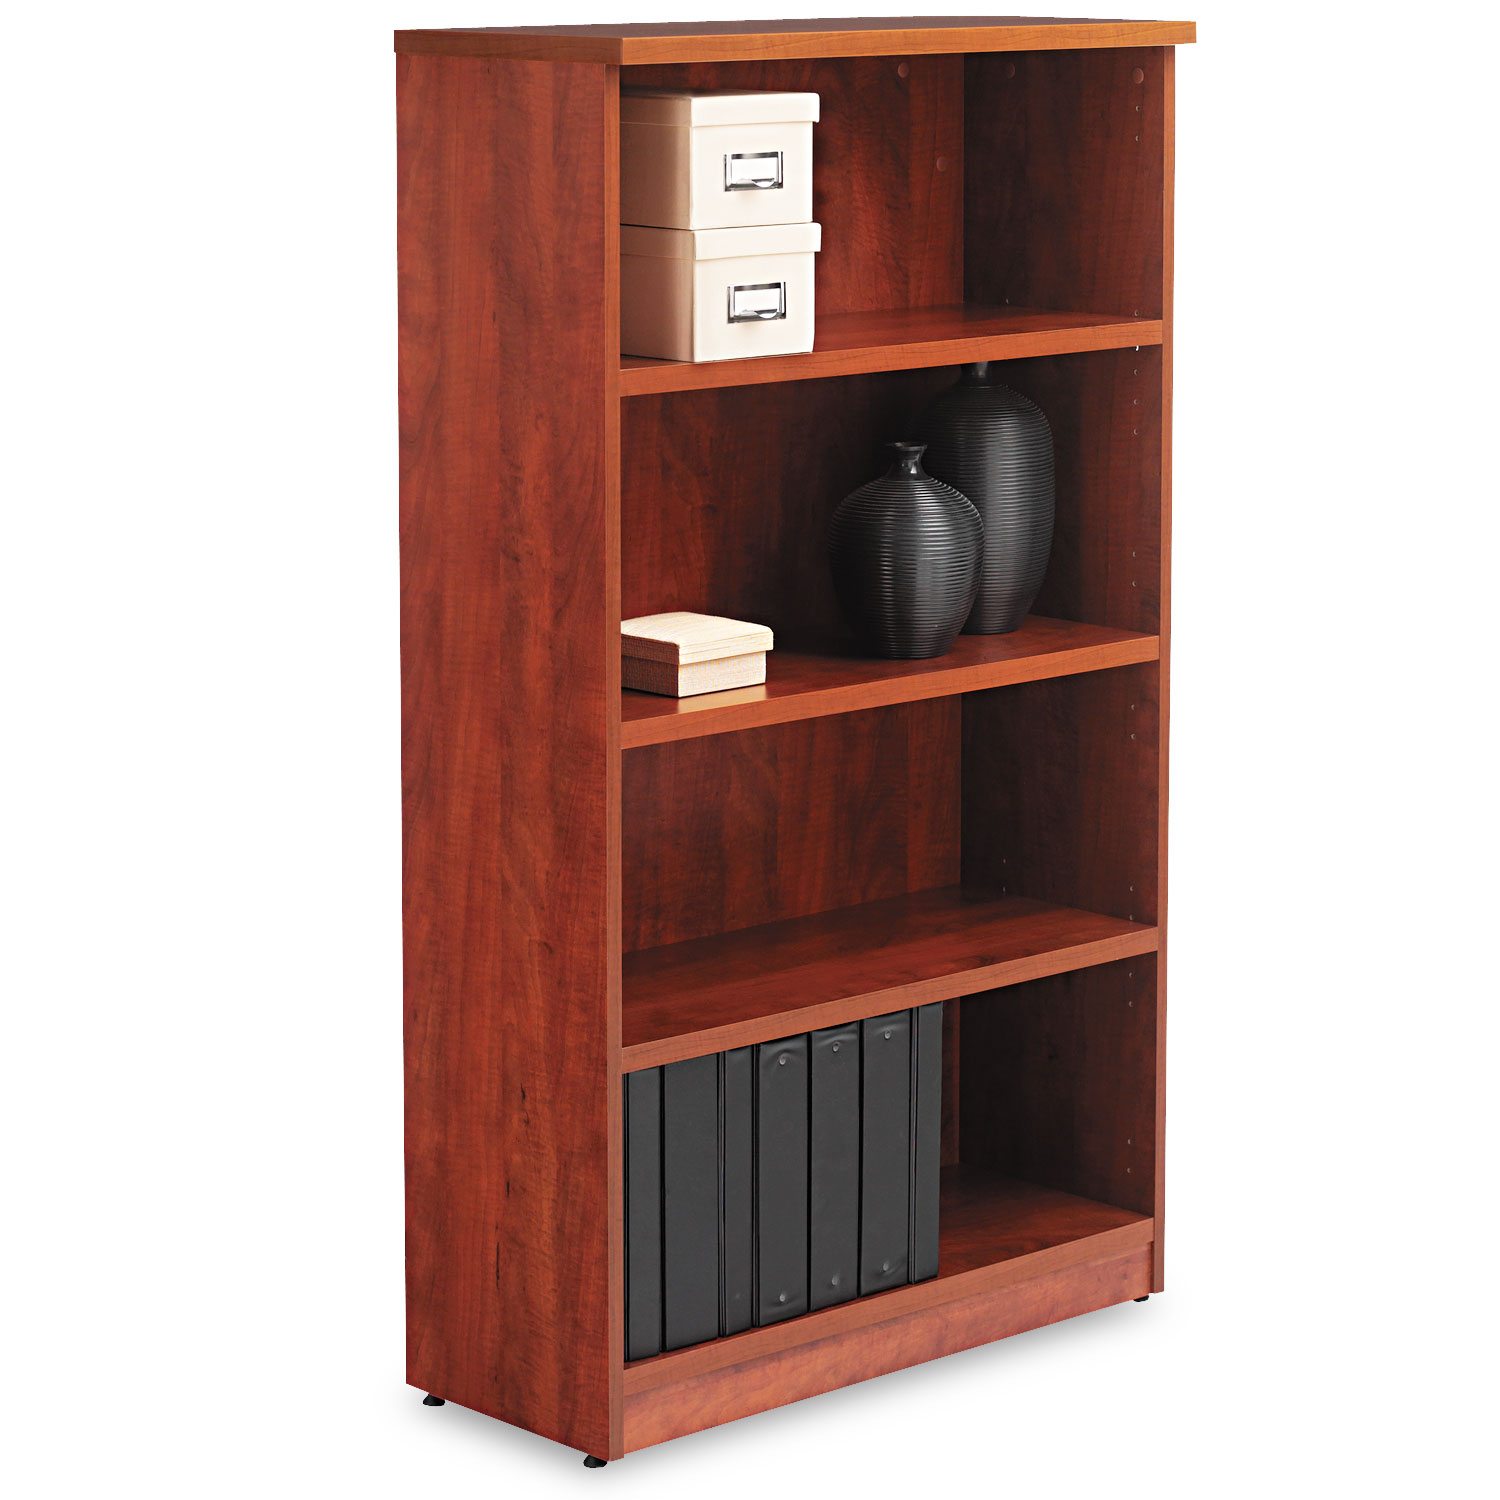 Alera Valencia Series Bookcase, Four-Shelf, 31 3/4w x 14d x 55h, Medium Cherry